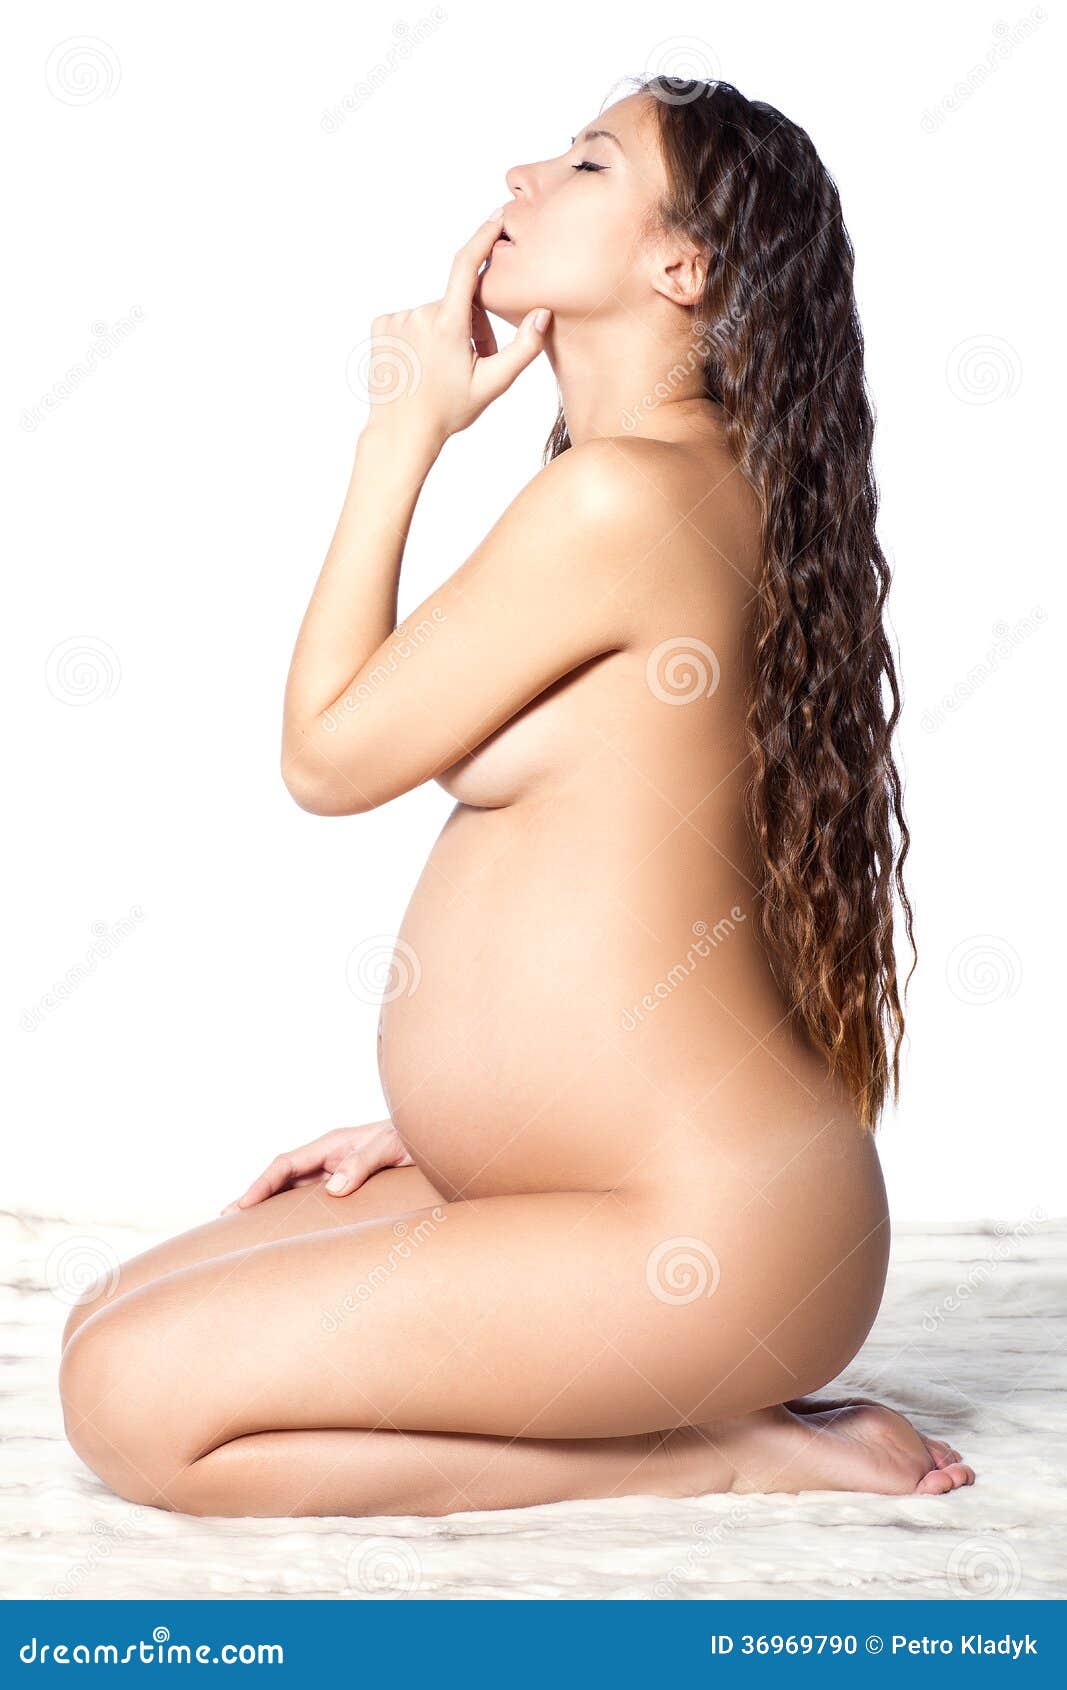 darwin lirio recommends Pregnant Teen Nudist